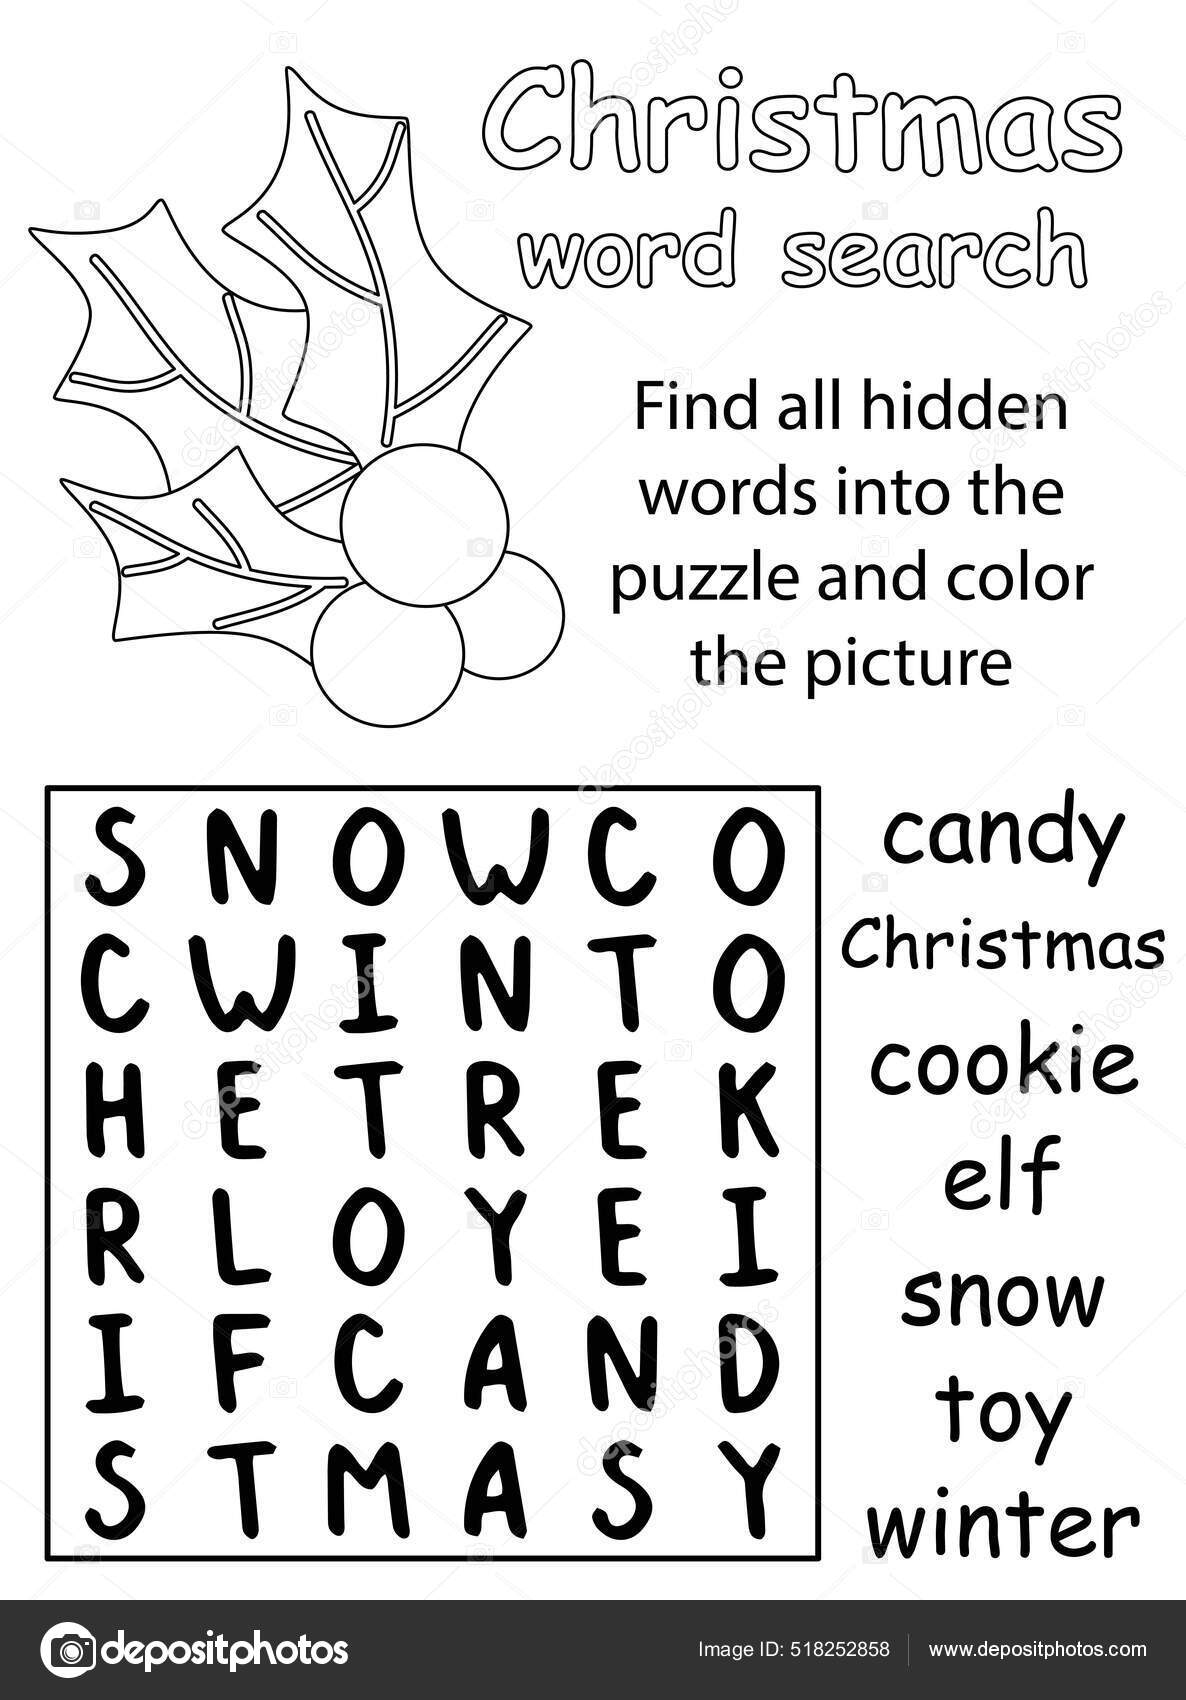 https://st.depositphotos.com/38732800/51825/v/1600/depositphotos_518252858-stock-illustration-christmas-word-search-puzzle-for.jpg